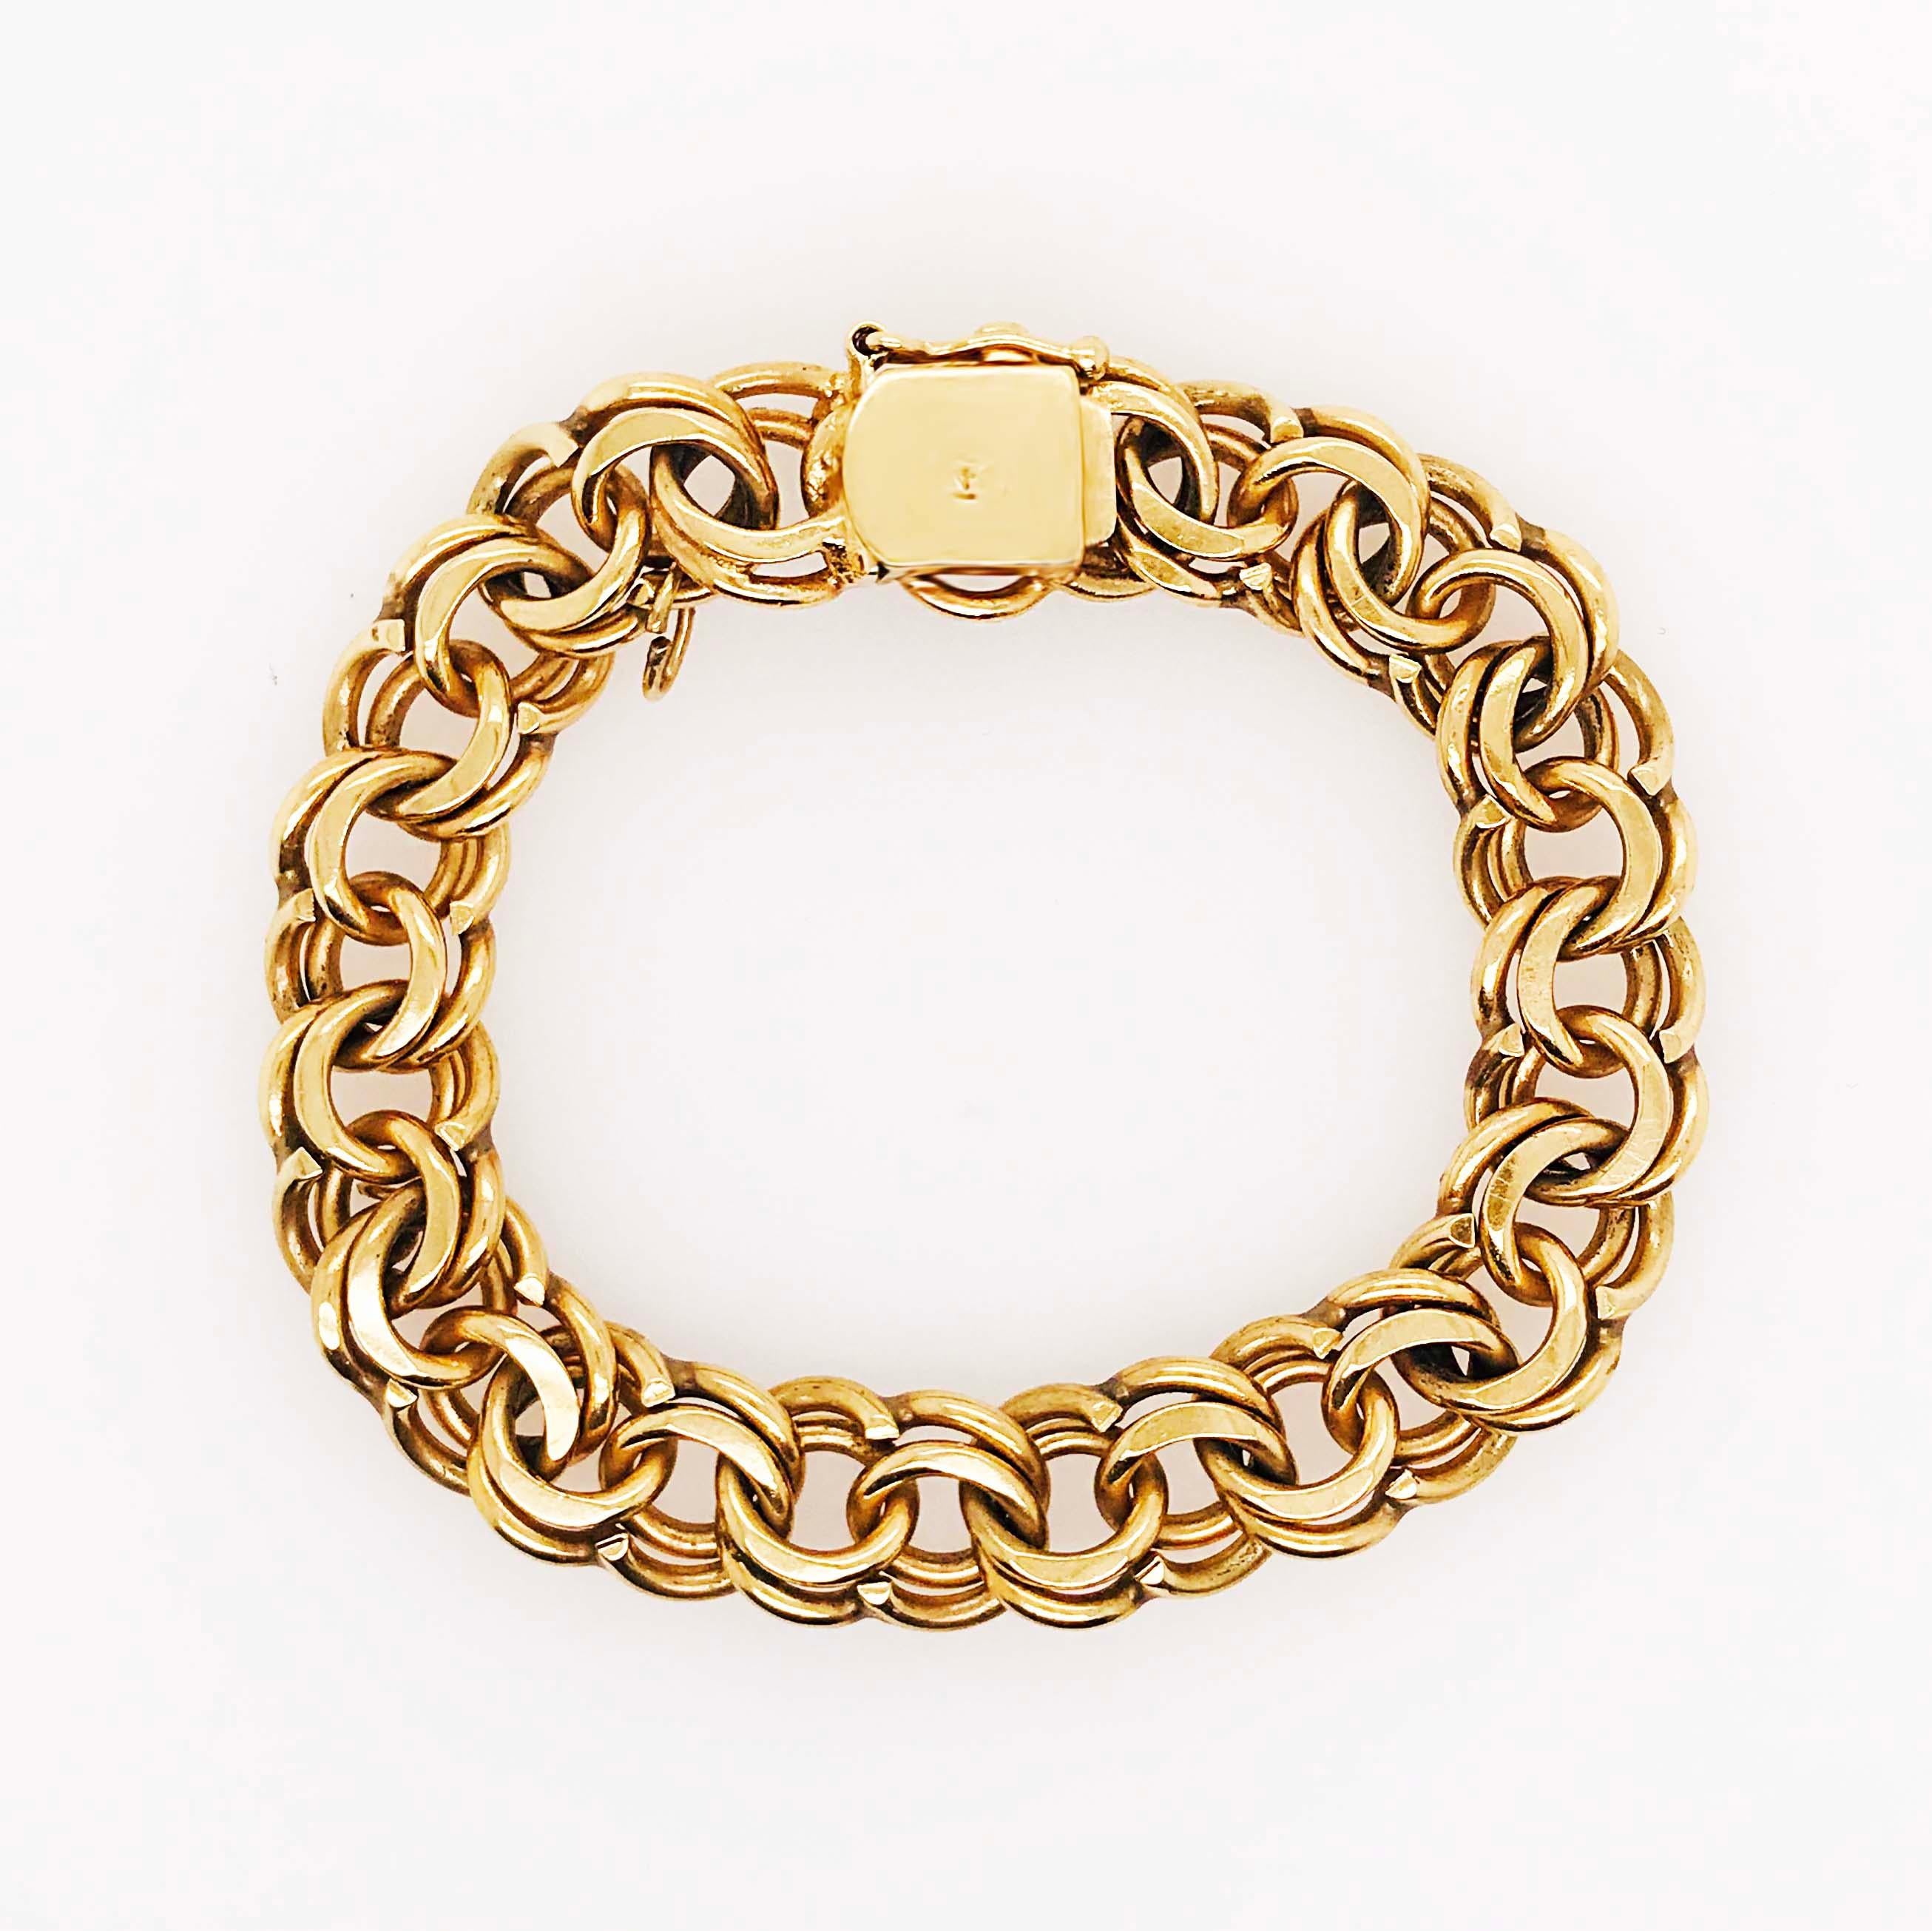 Heavy Gold Charm Bracelet, 14 Karat Large Gold Chain Bracelet 1